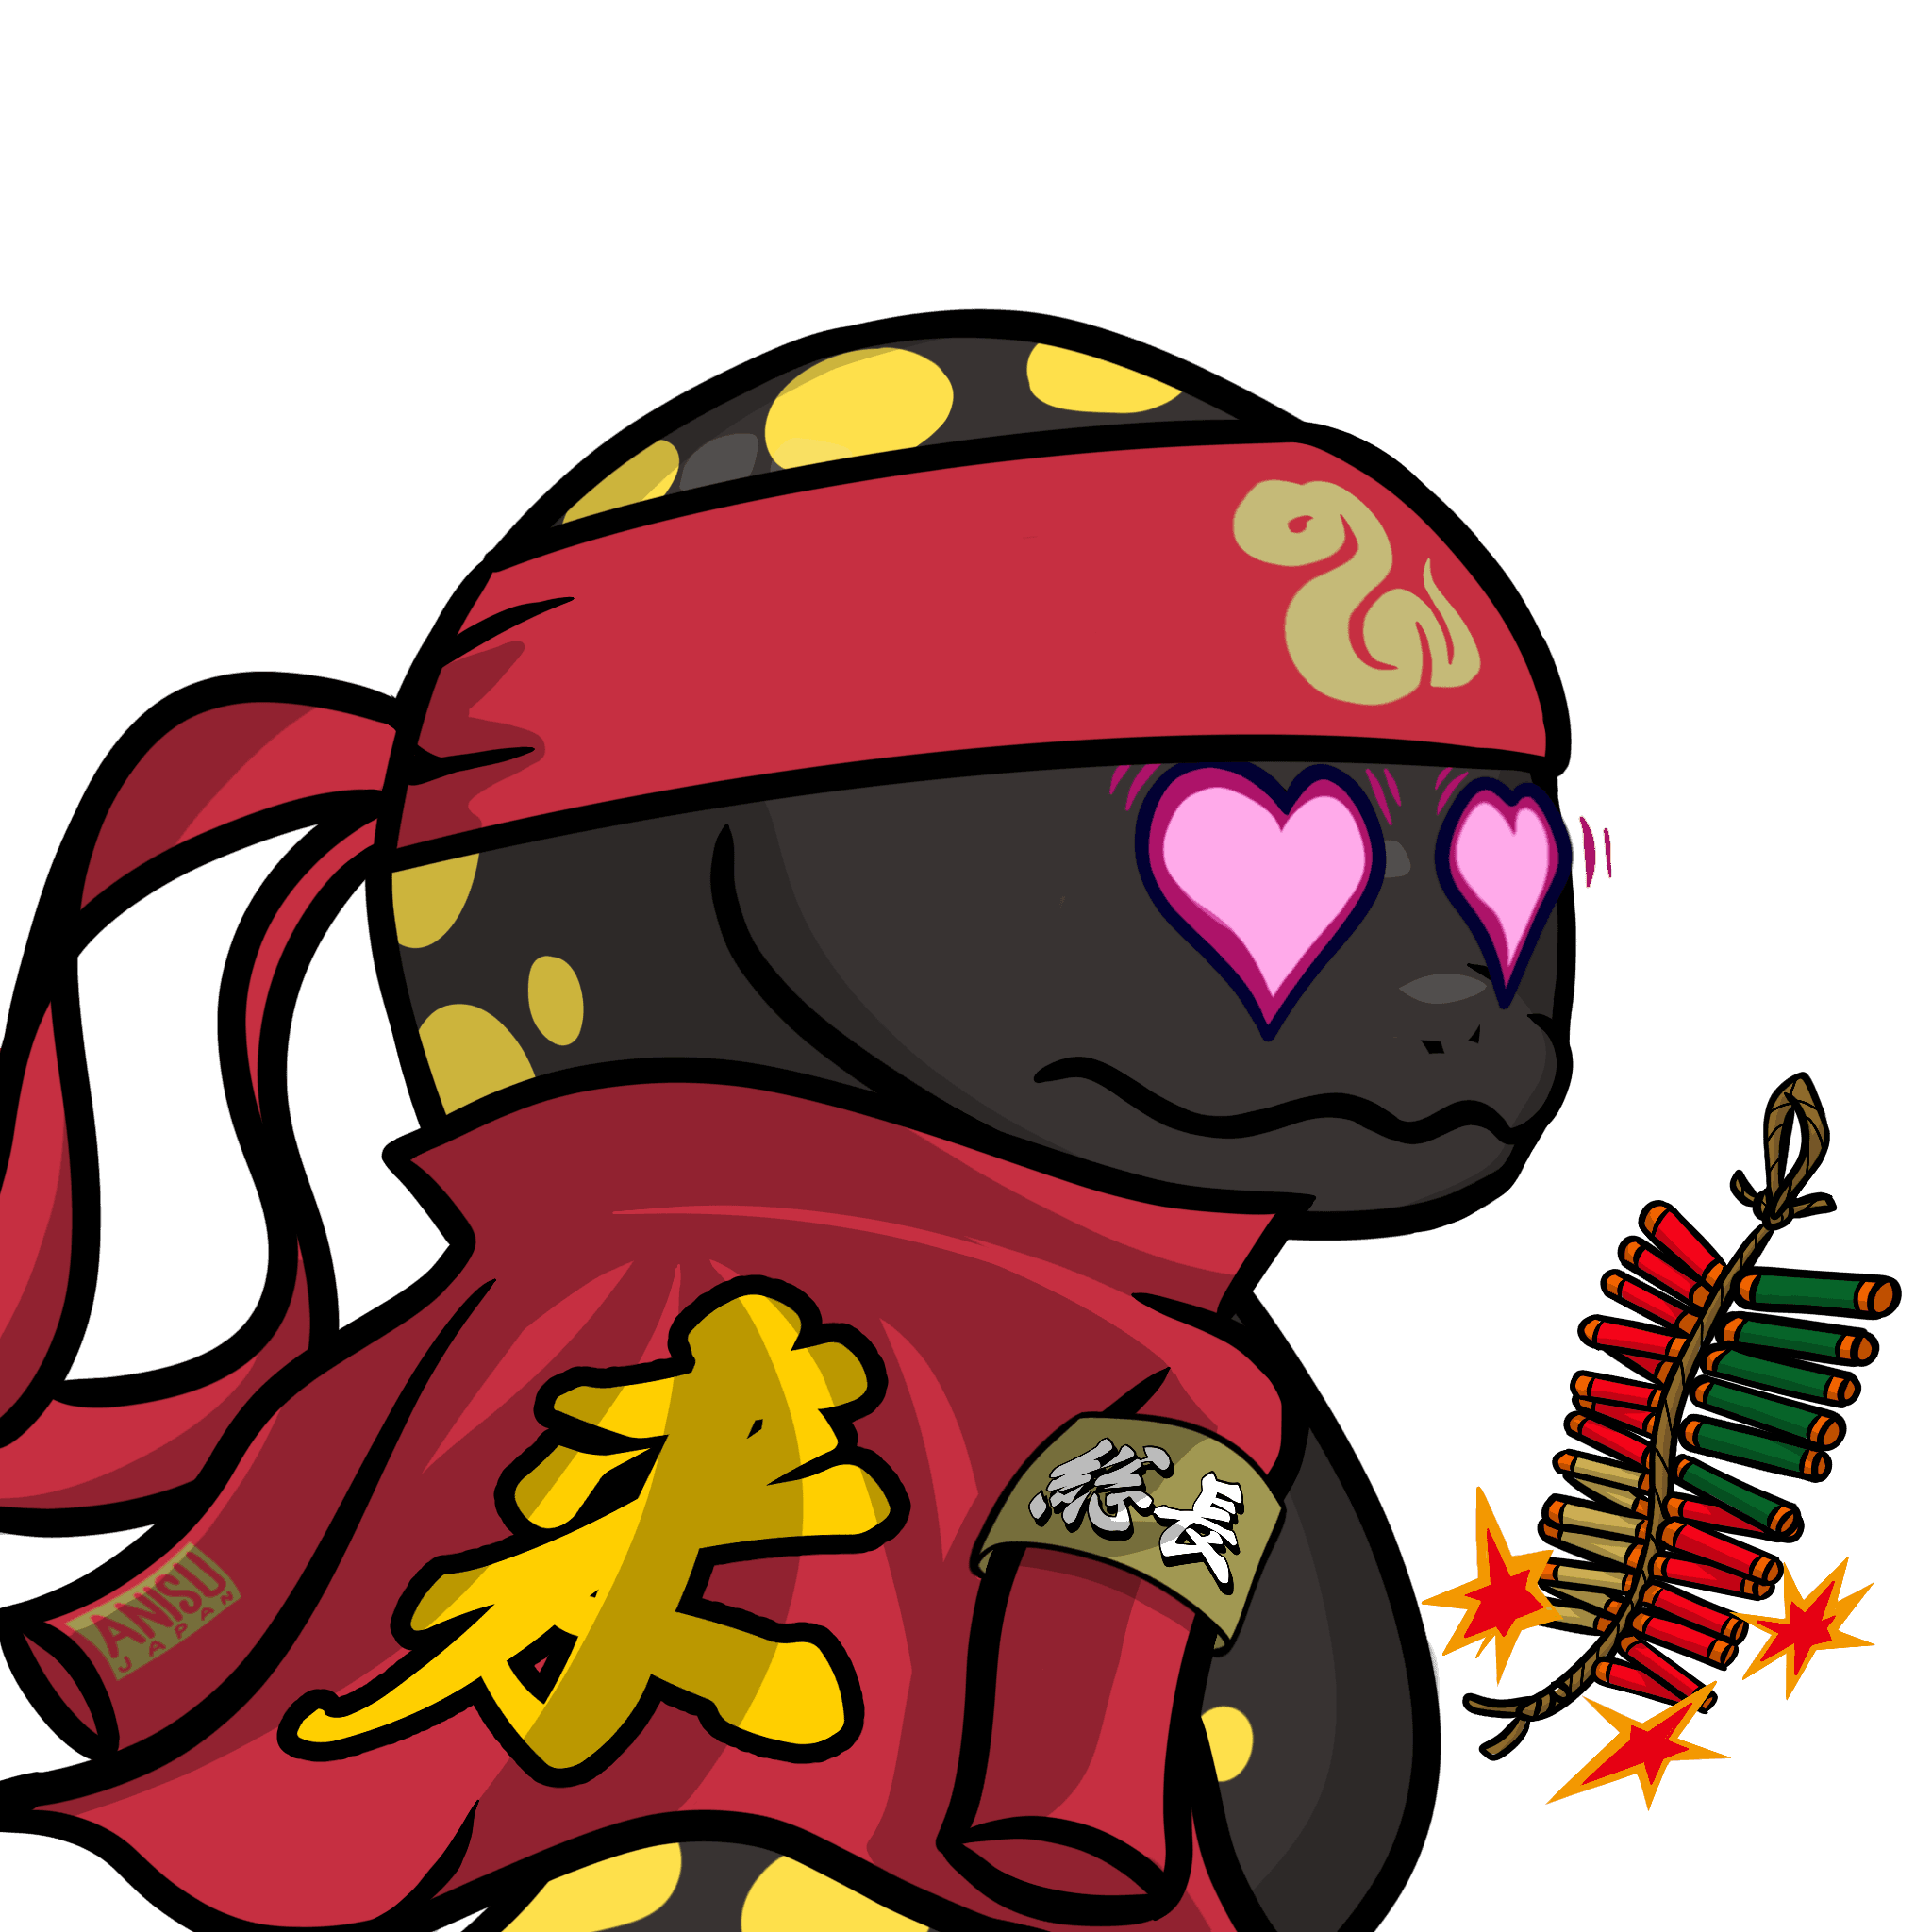 Orochi-Pointed-salamander #3420